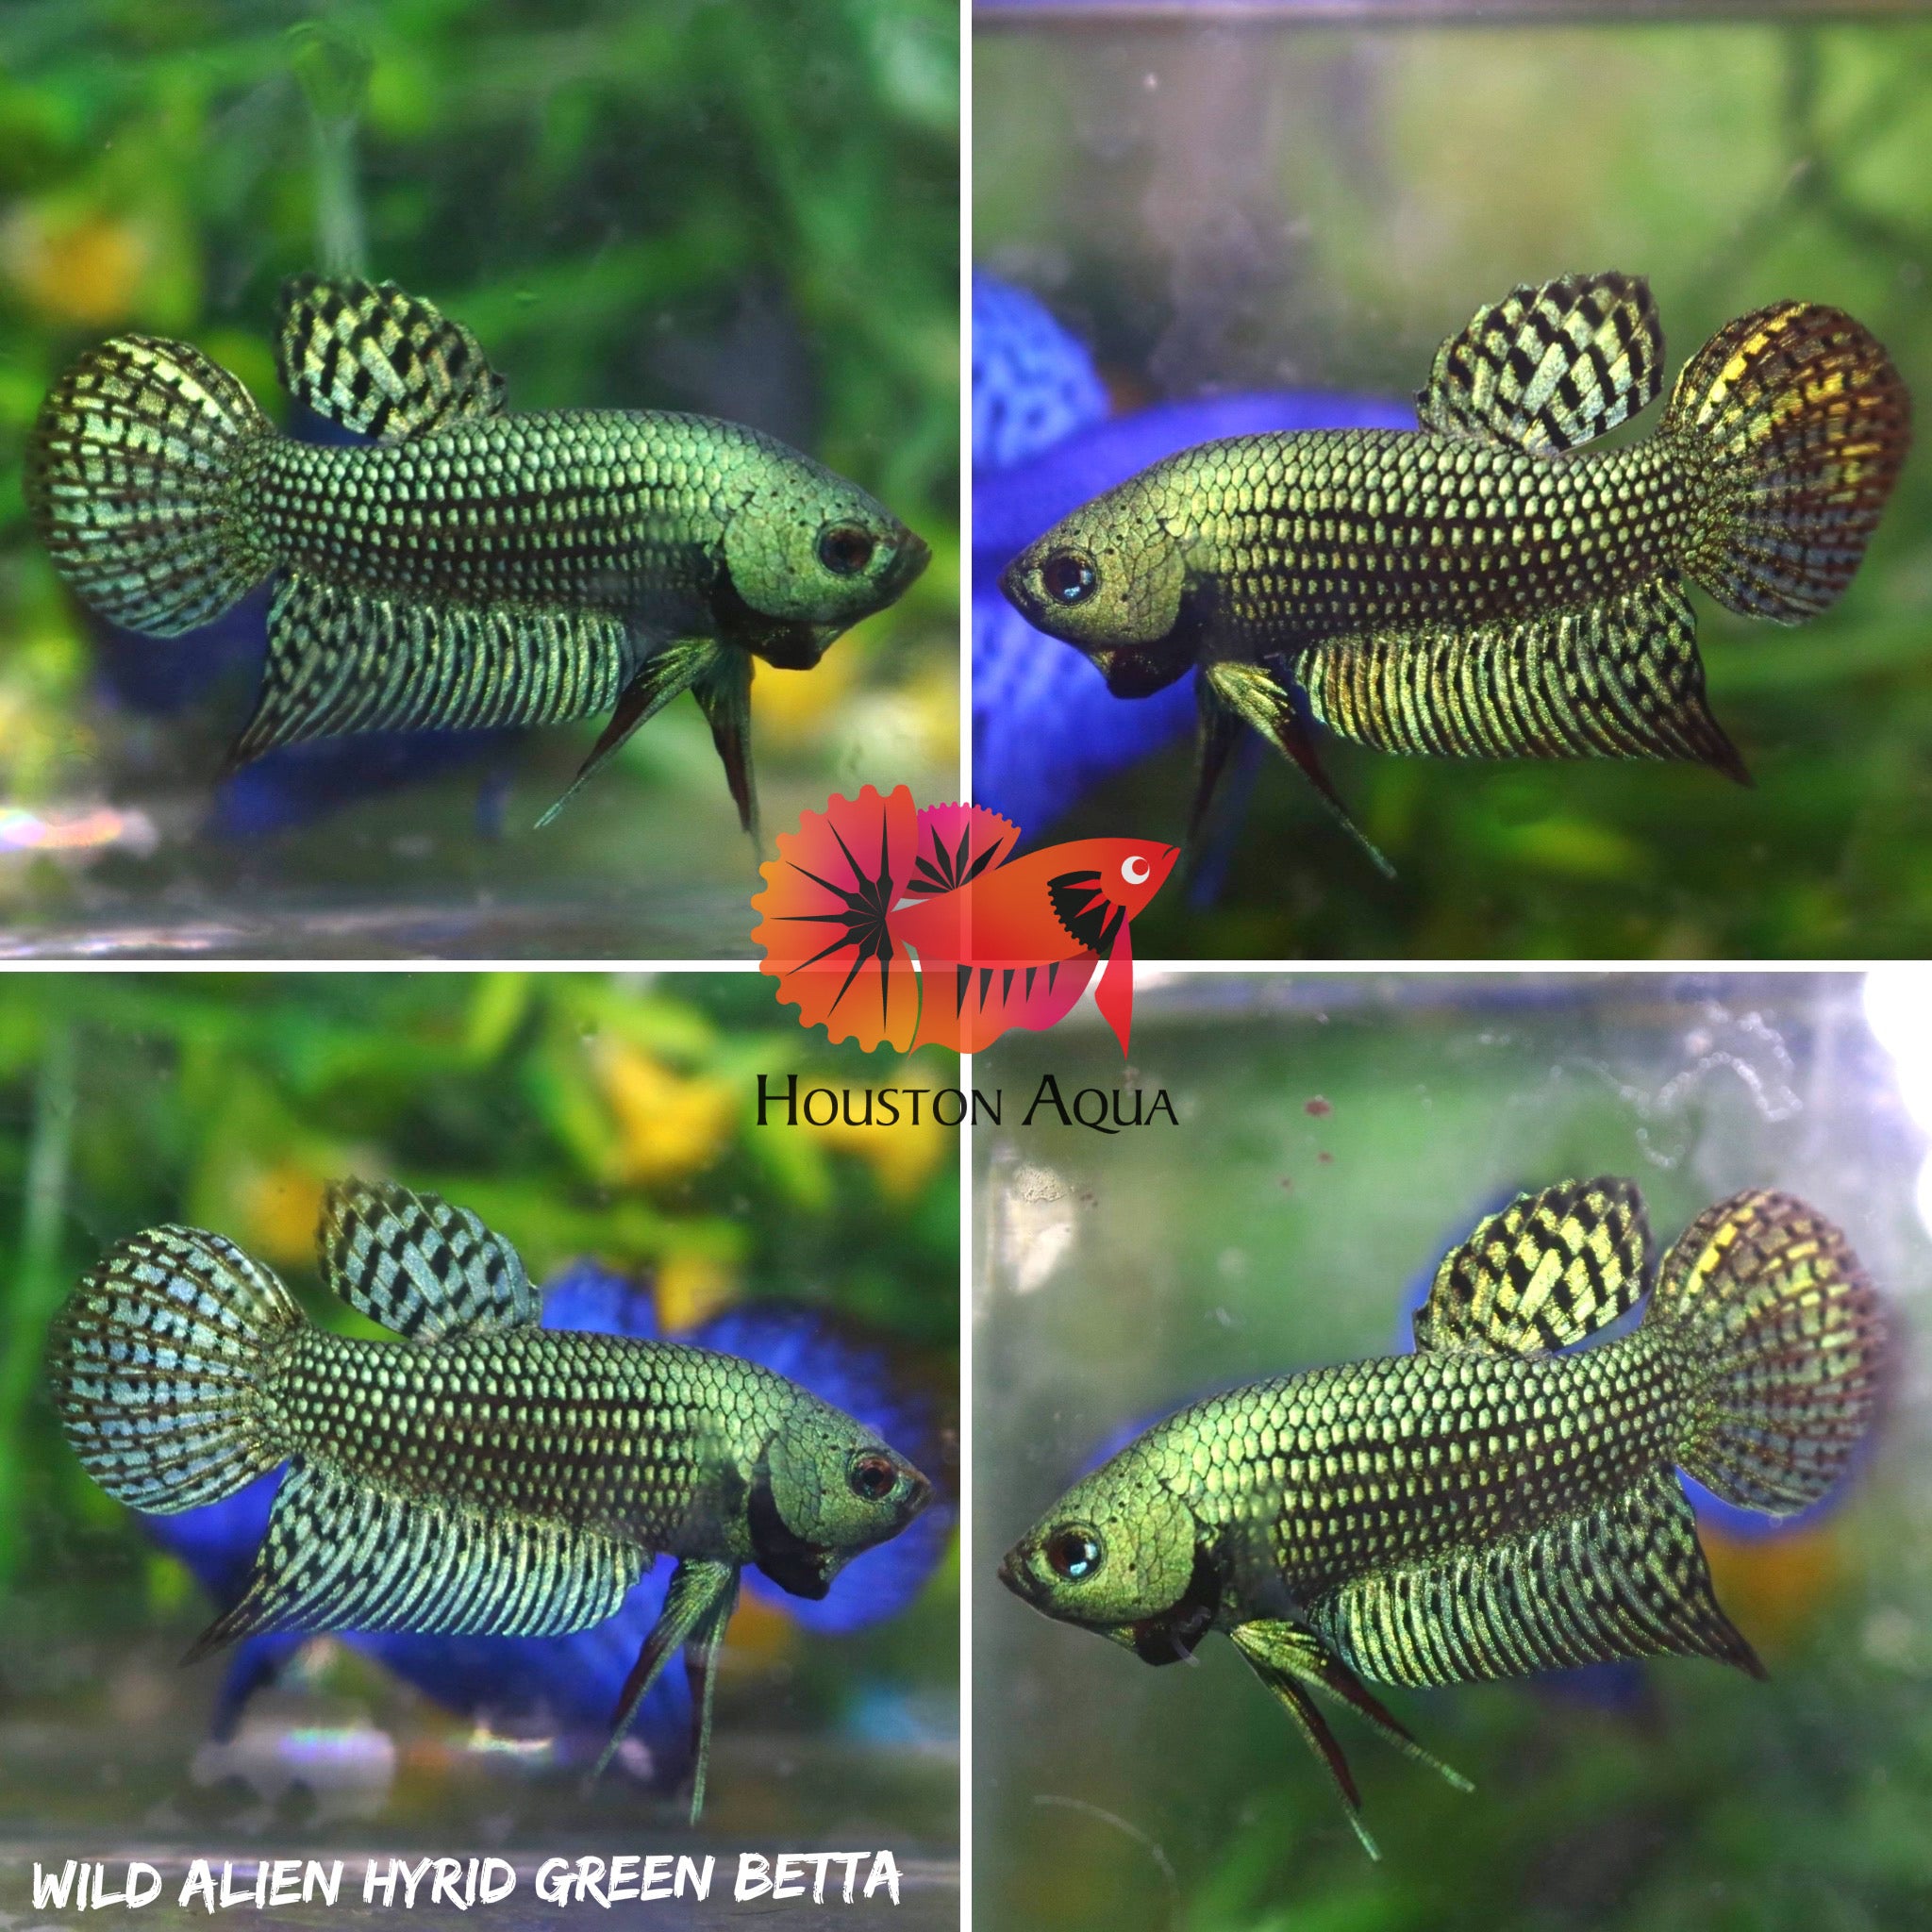 Green Alien Wild Betta Live Fish